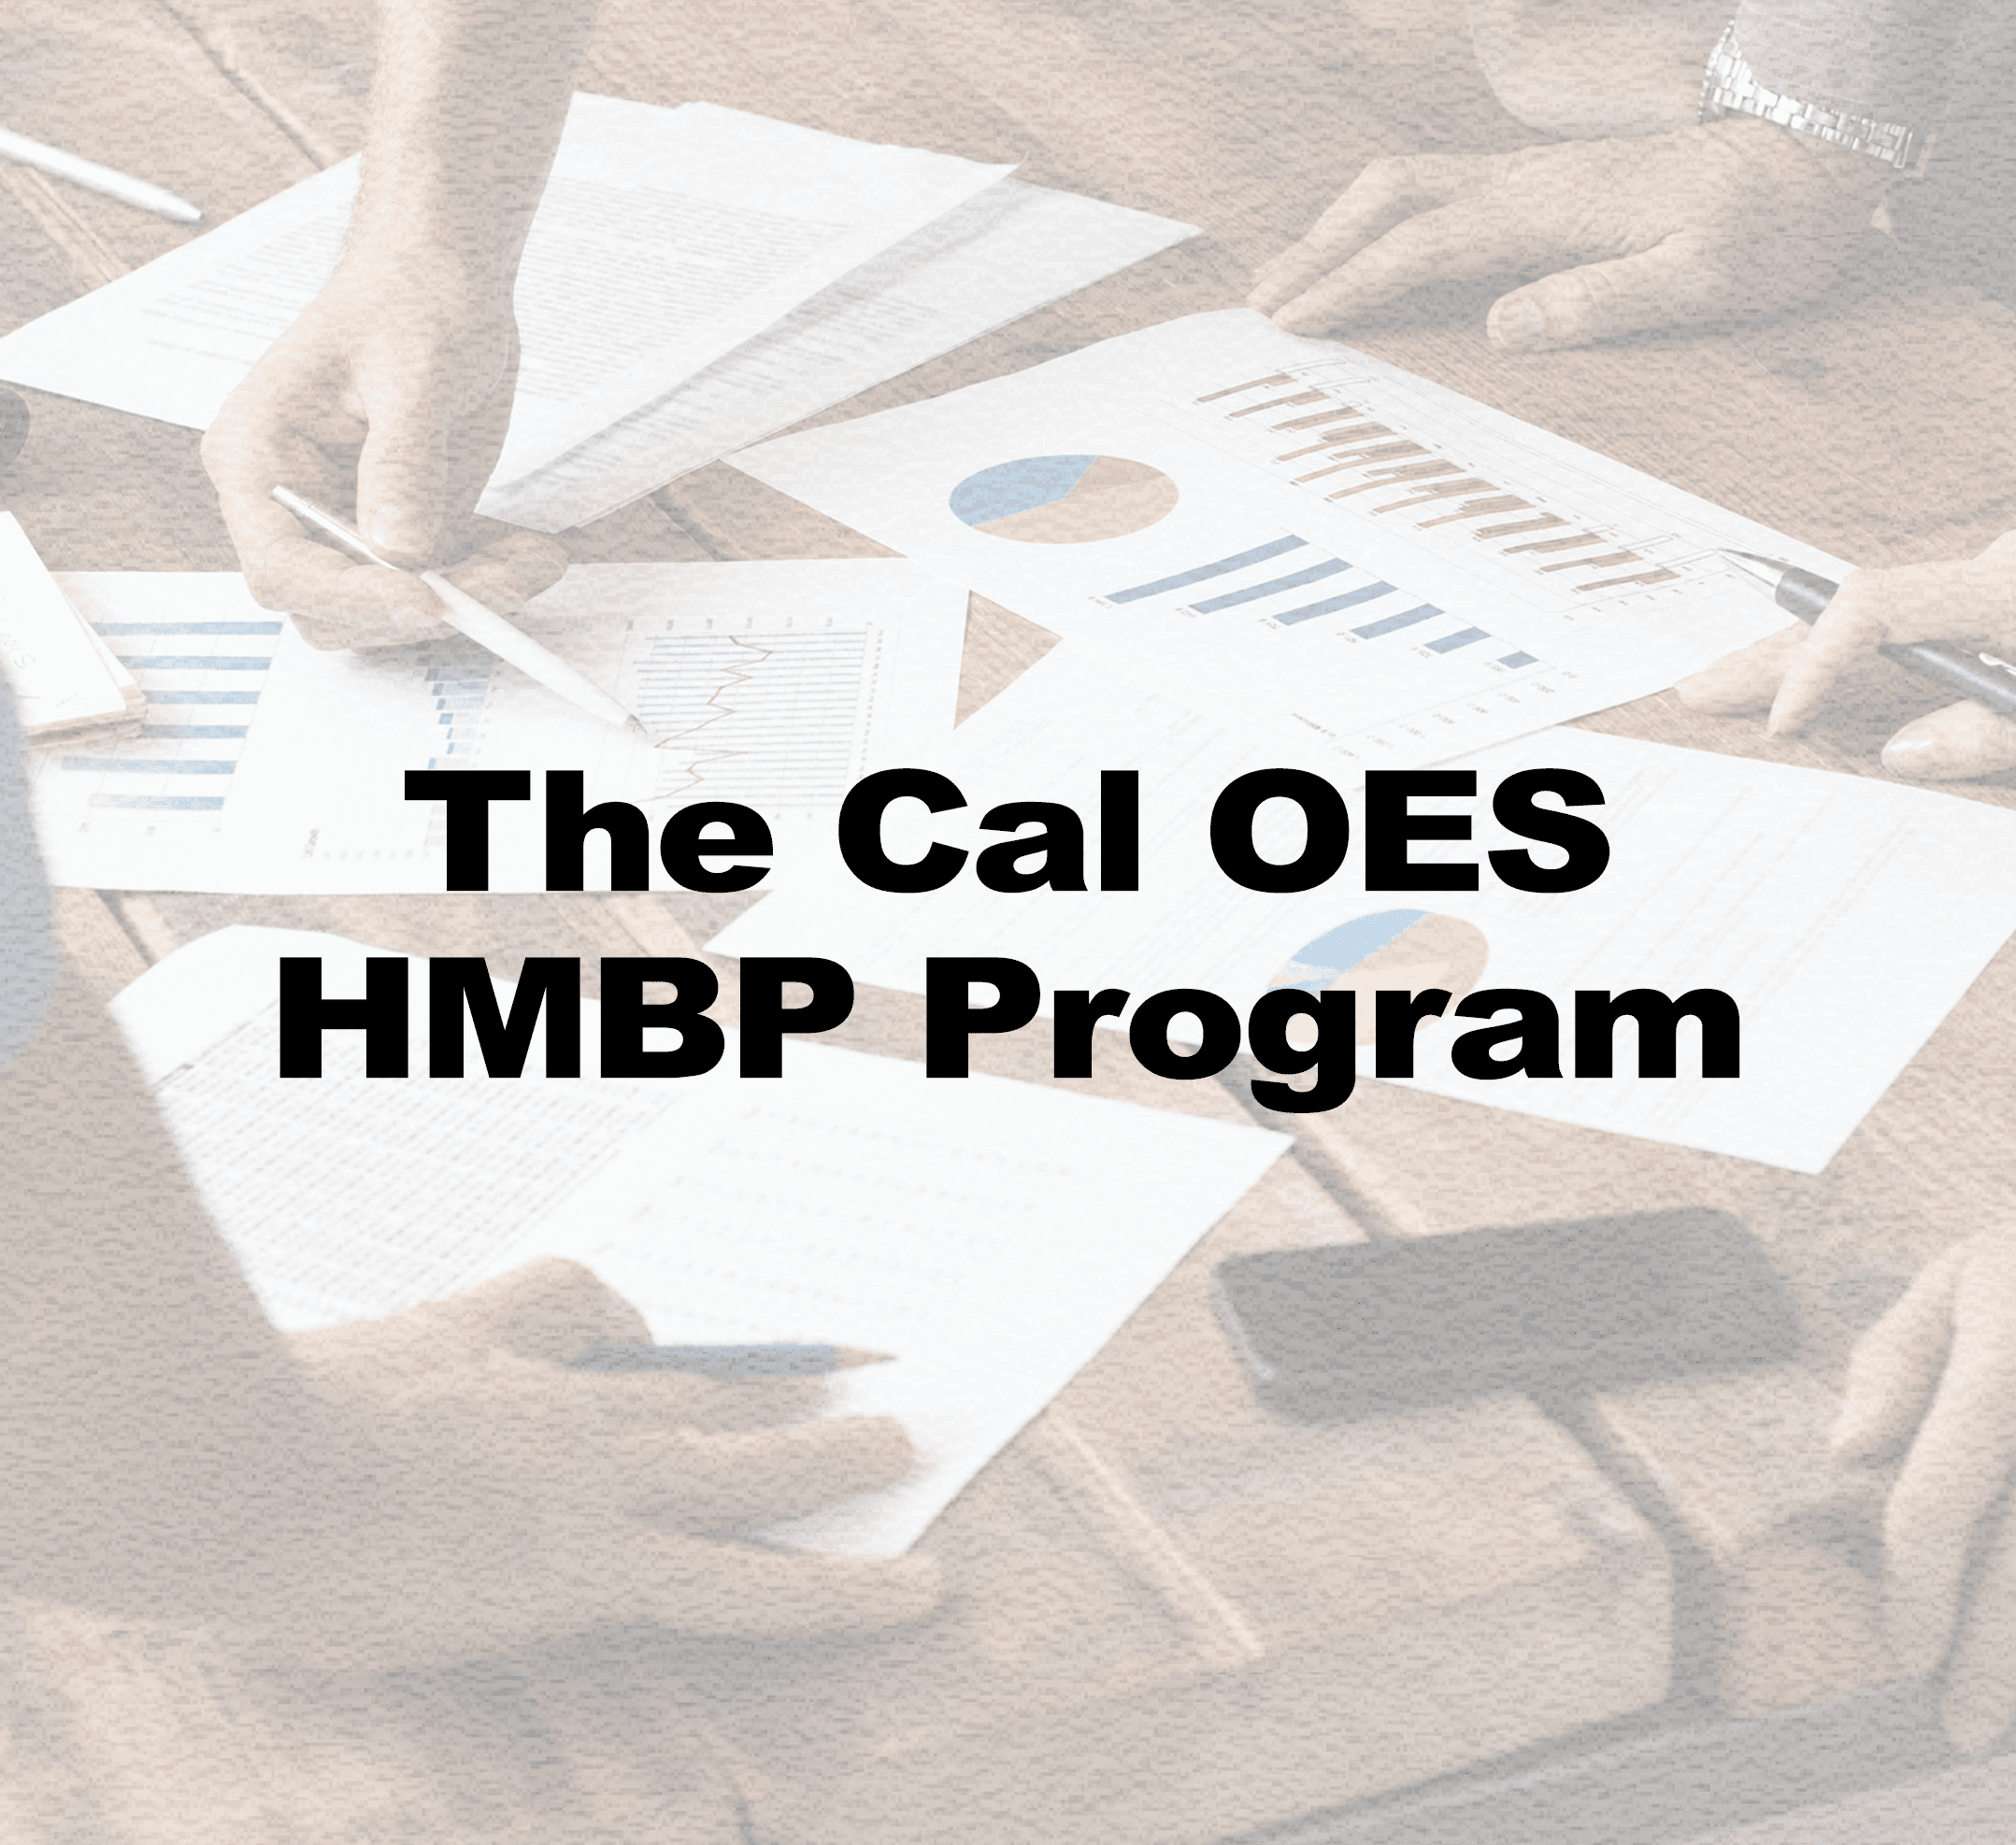 The Cal OES HMBP Program